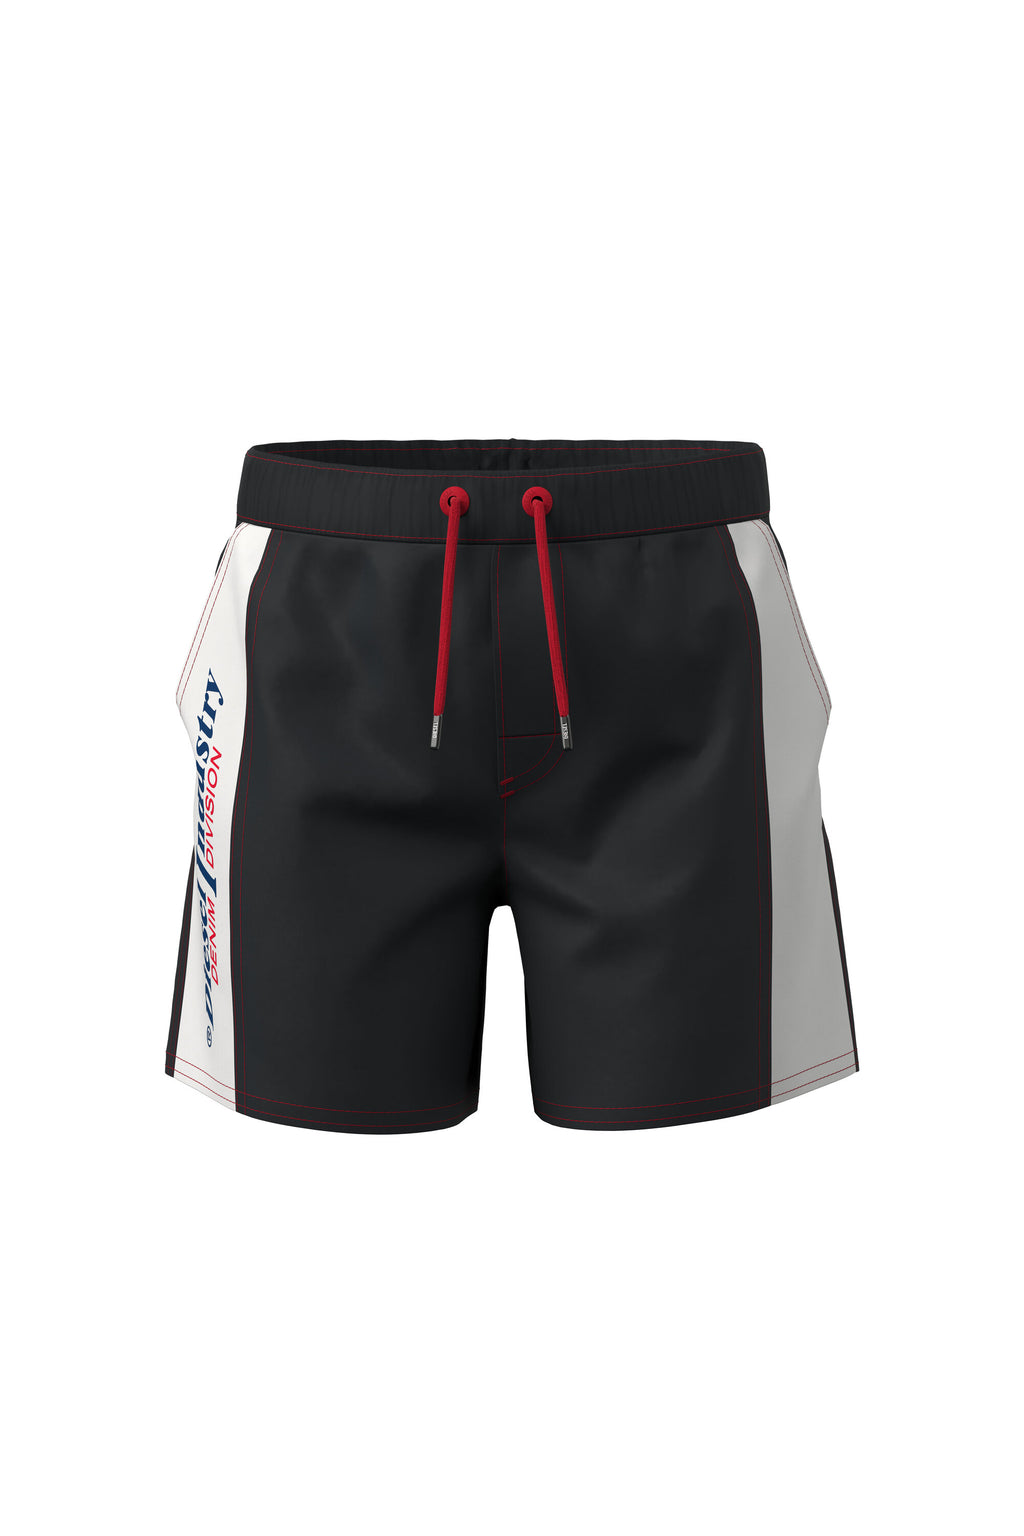 Black boxer shorts with logo and drawstring waistband